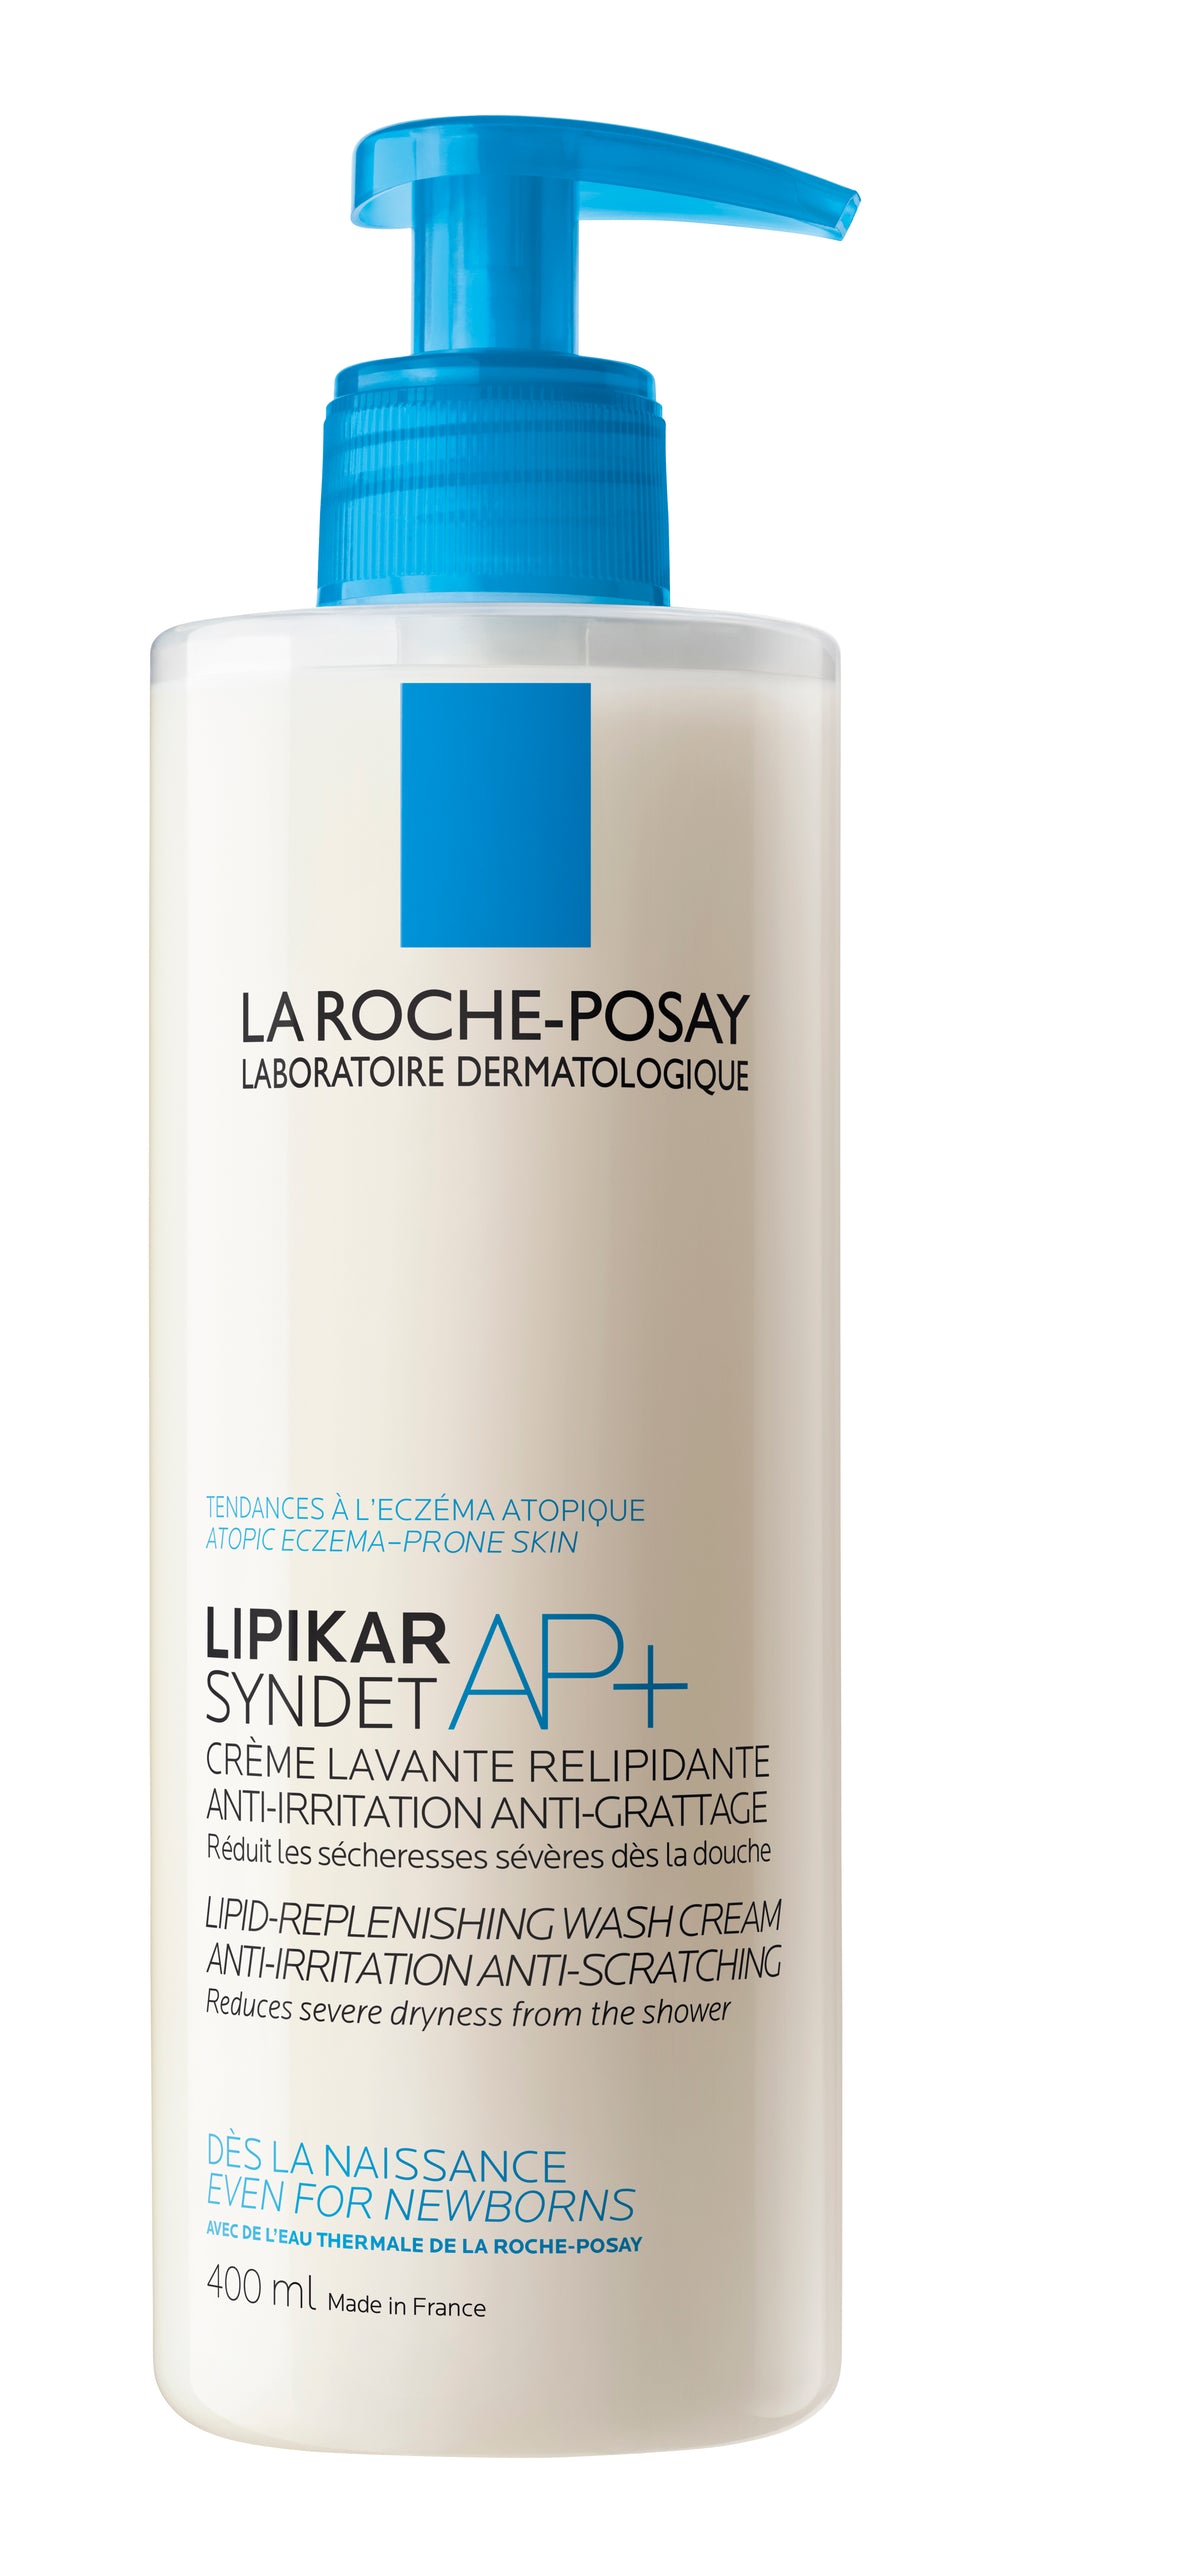 La Roche-Posay Lipikar Syndet AP+